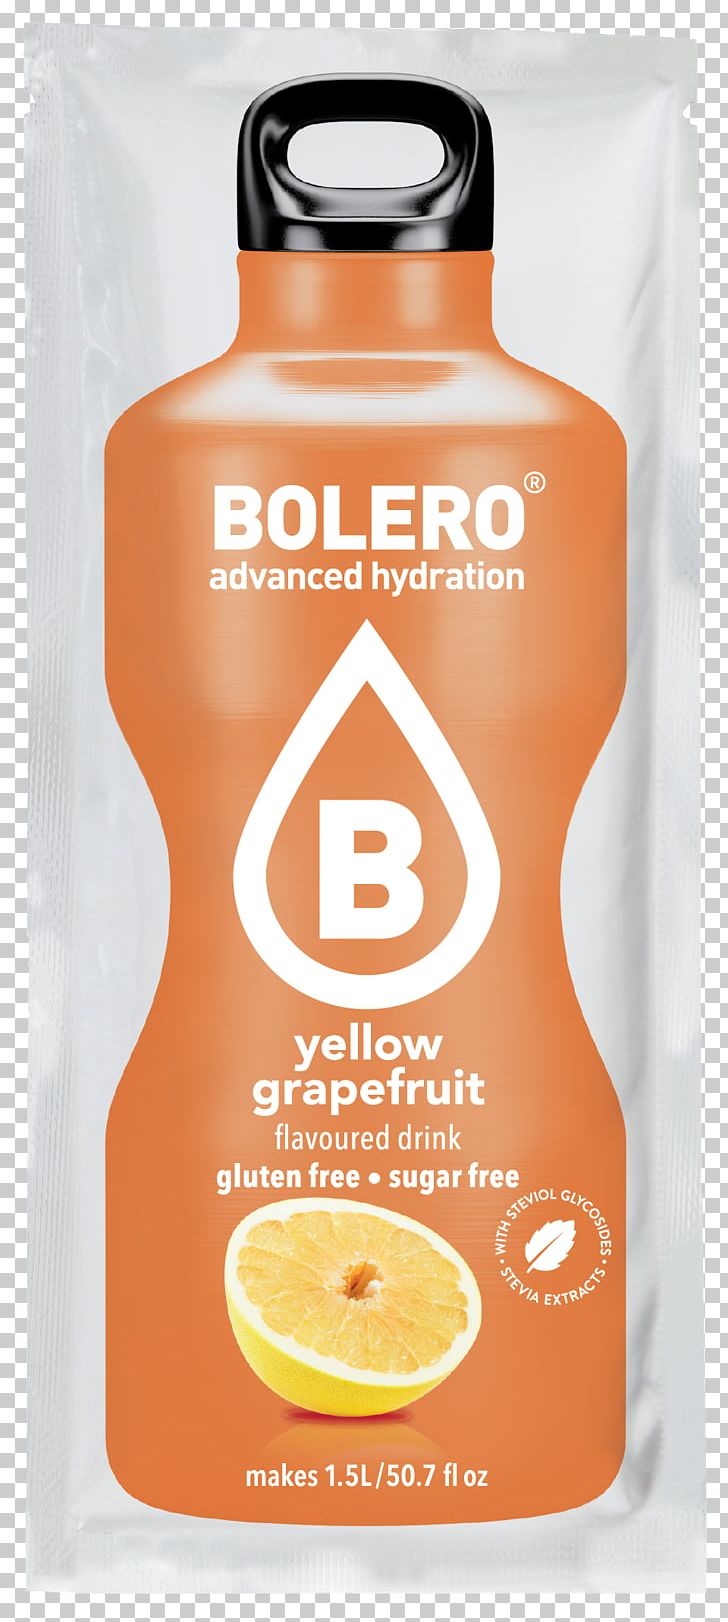 Bolero Drinks New Zealand Lemonade Drink Mix Elderflower Cordial PNG, Clipart, Beverages, Carbohydrate, Coconut Water, Drink, Drink Mix Free PNG Download